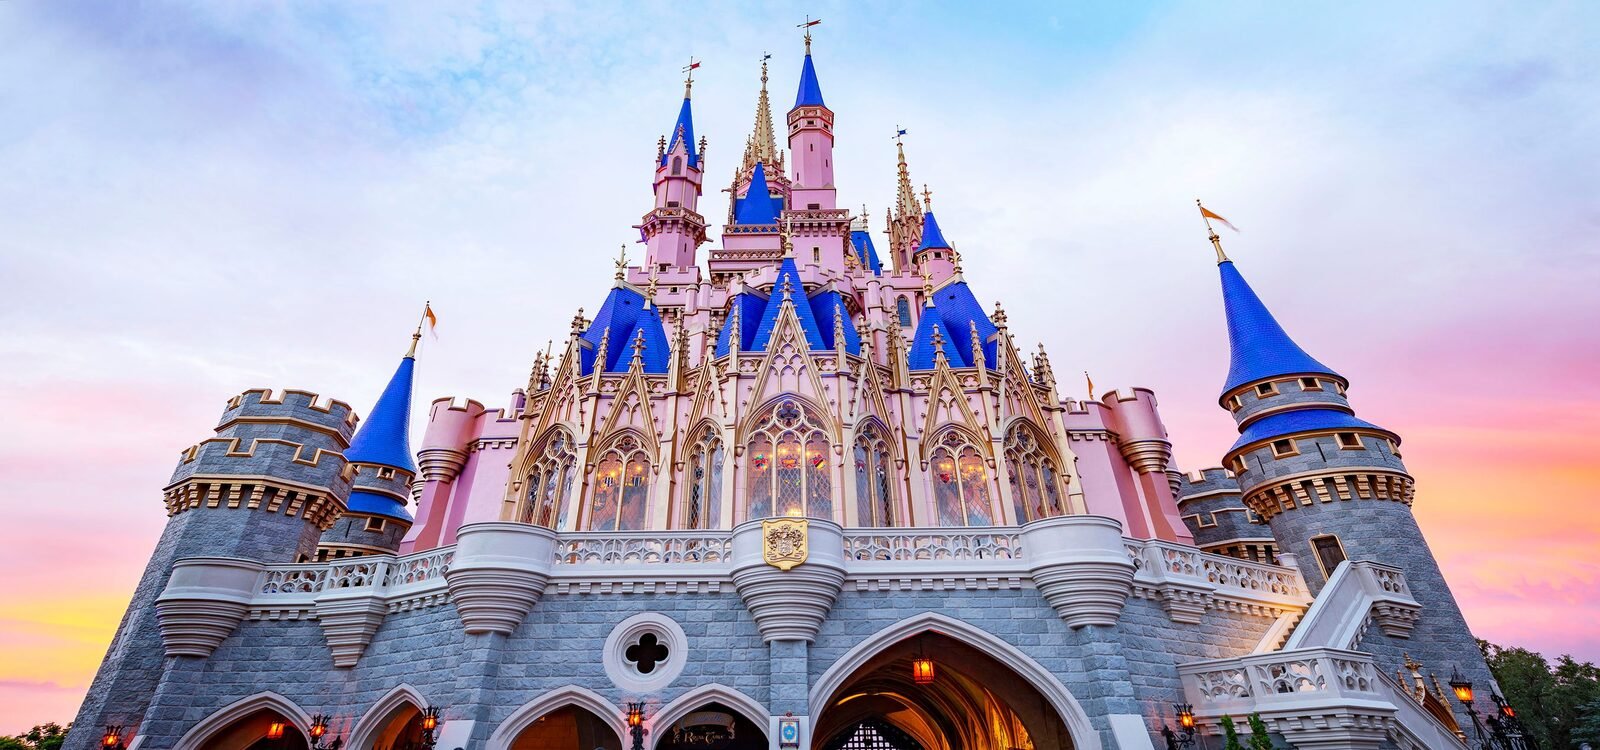 Disney-castle-dining.jpg